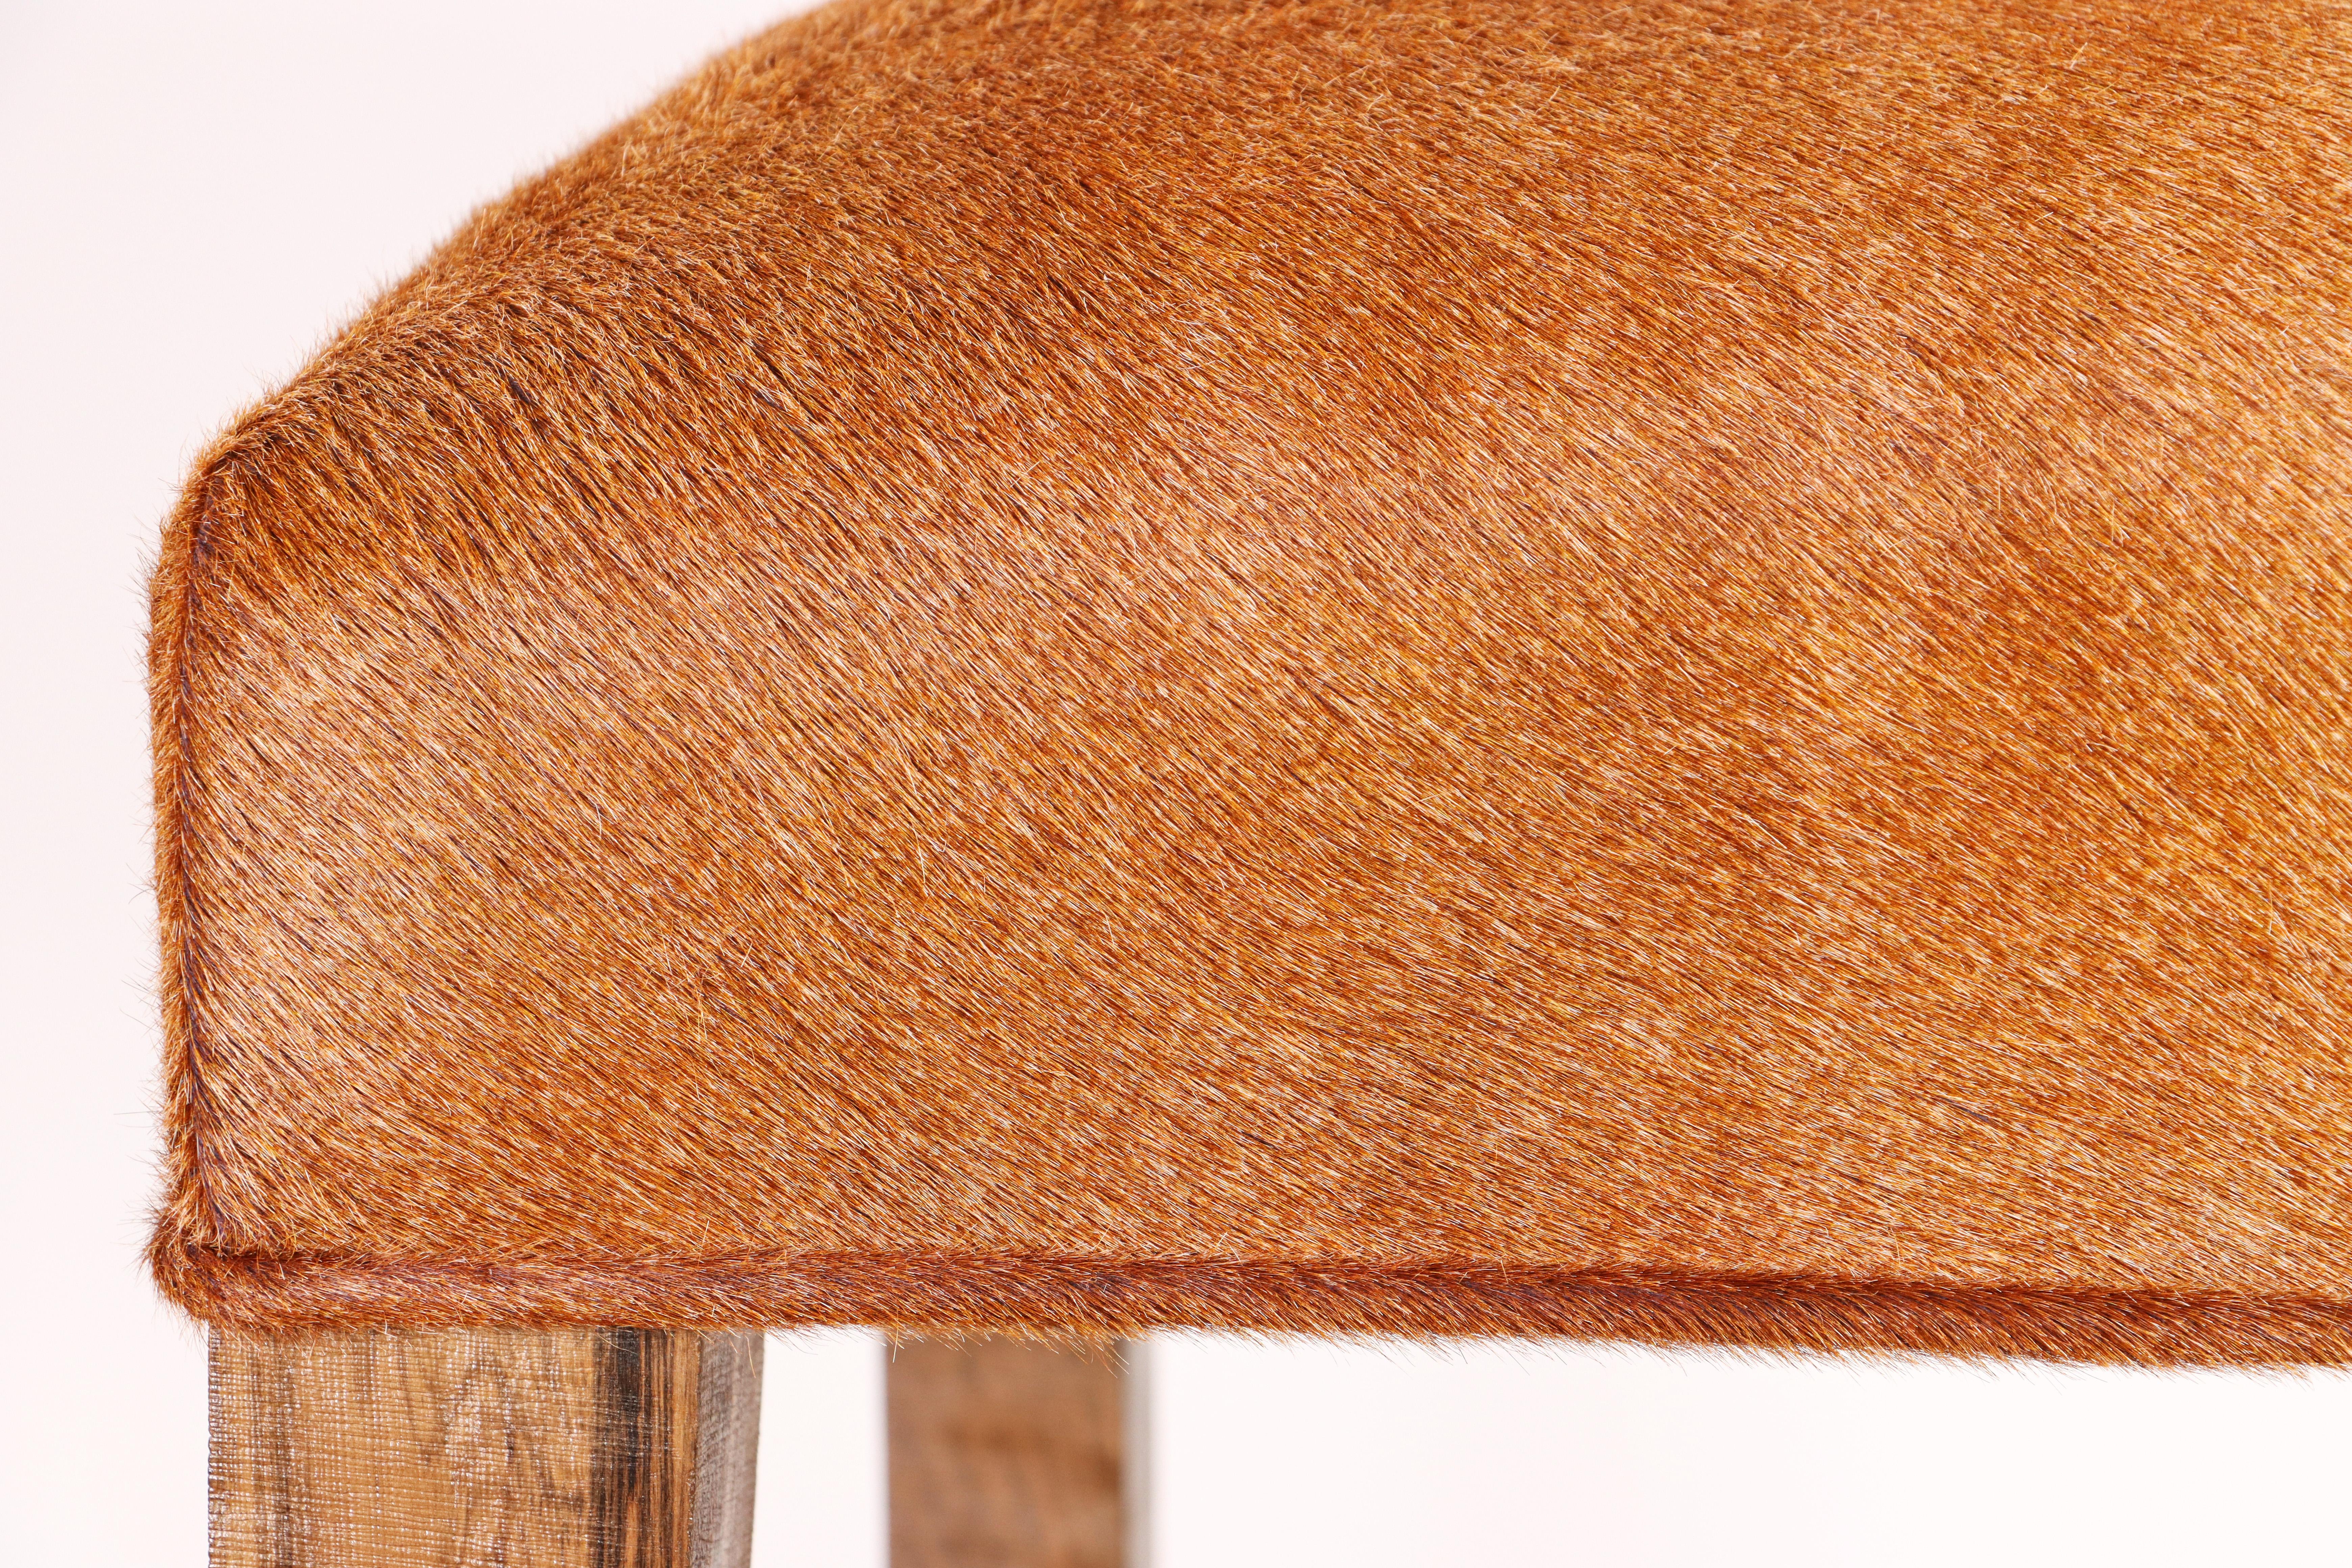 Cuir Tabouret contemporain en bois exotique en cuir de peau de poil de Costantini, Ecco en vente